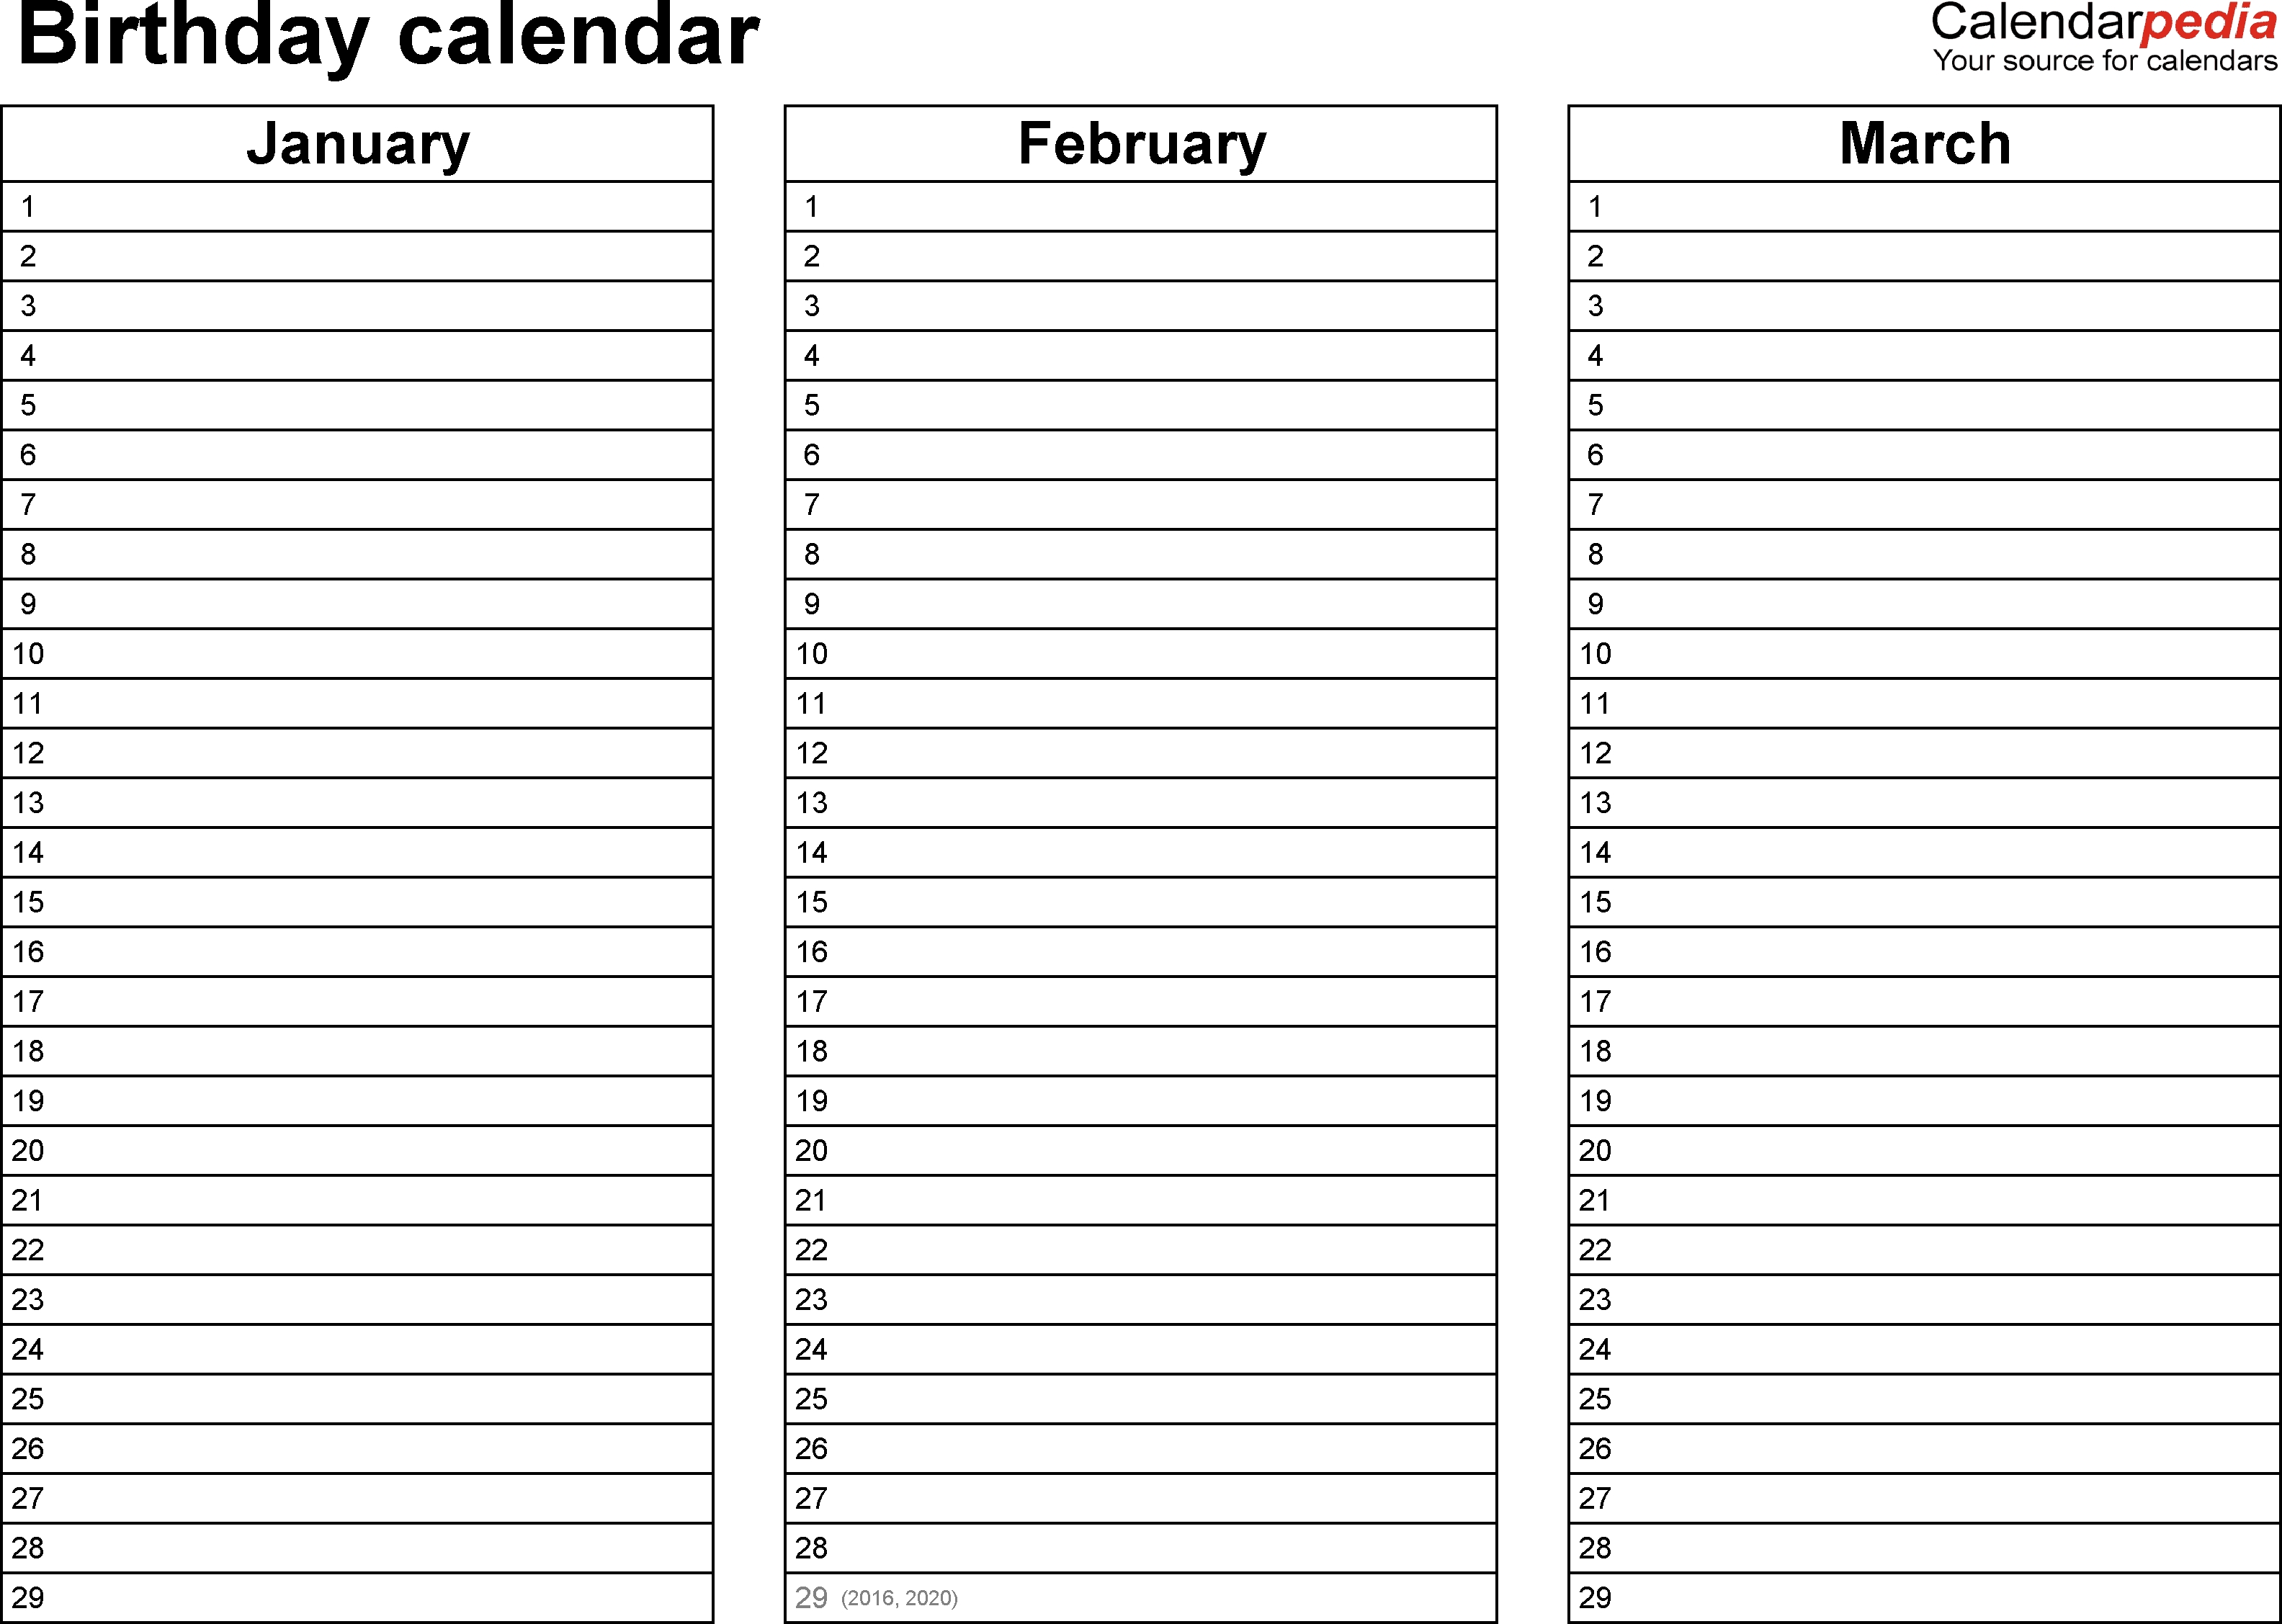 Birthday Calendars - 7 Free Printable Word Templates Monthly Calendar No Year